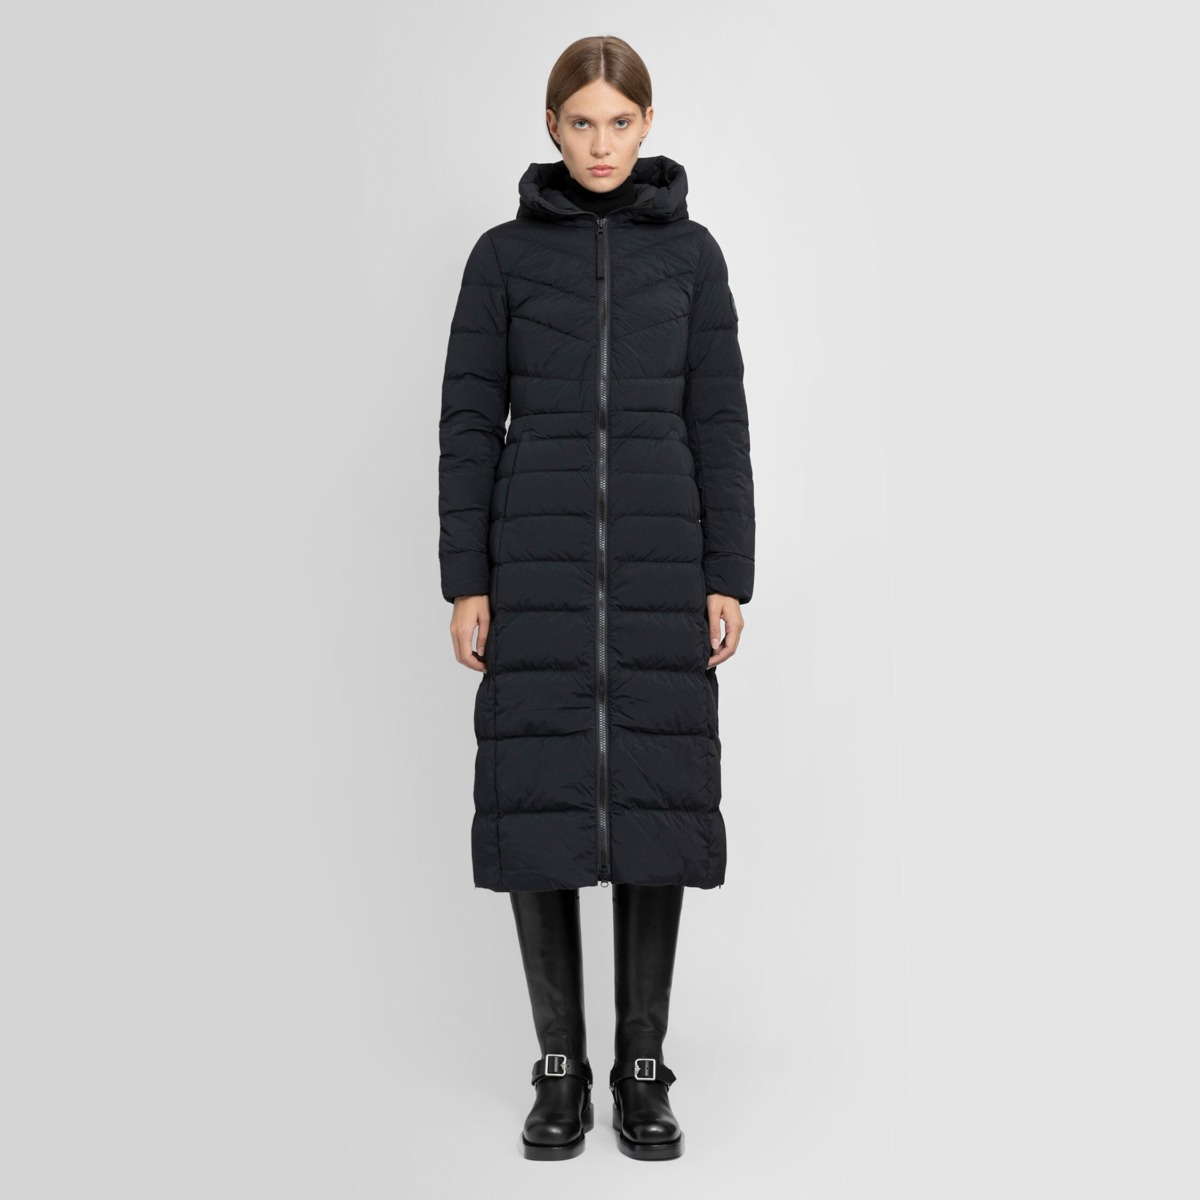 Woman Coat in Black - Canada Goose - Antonioli GOOFASH